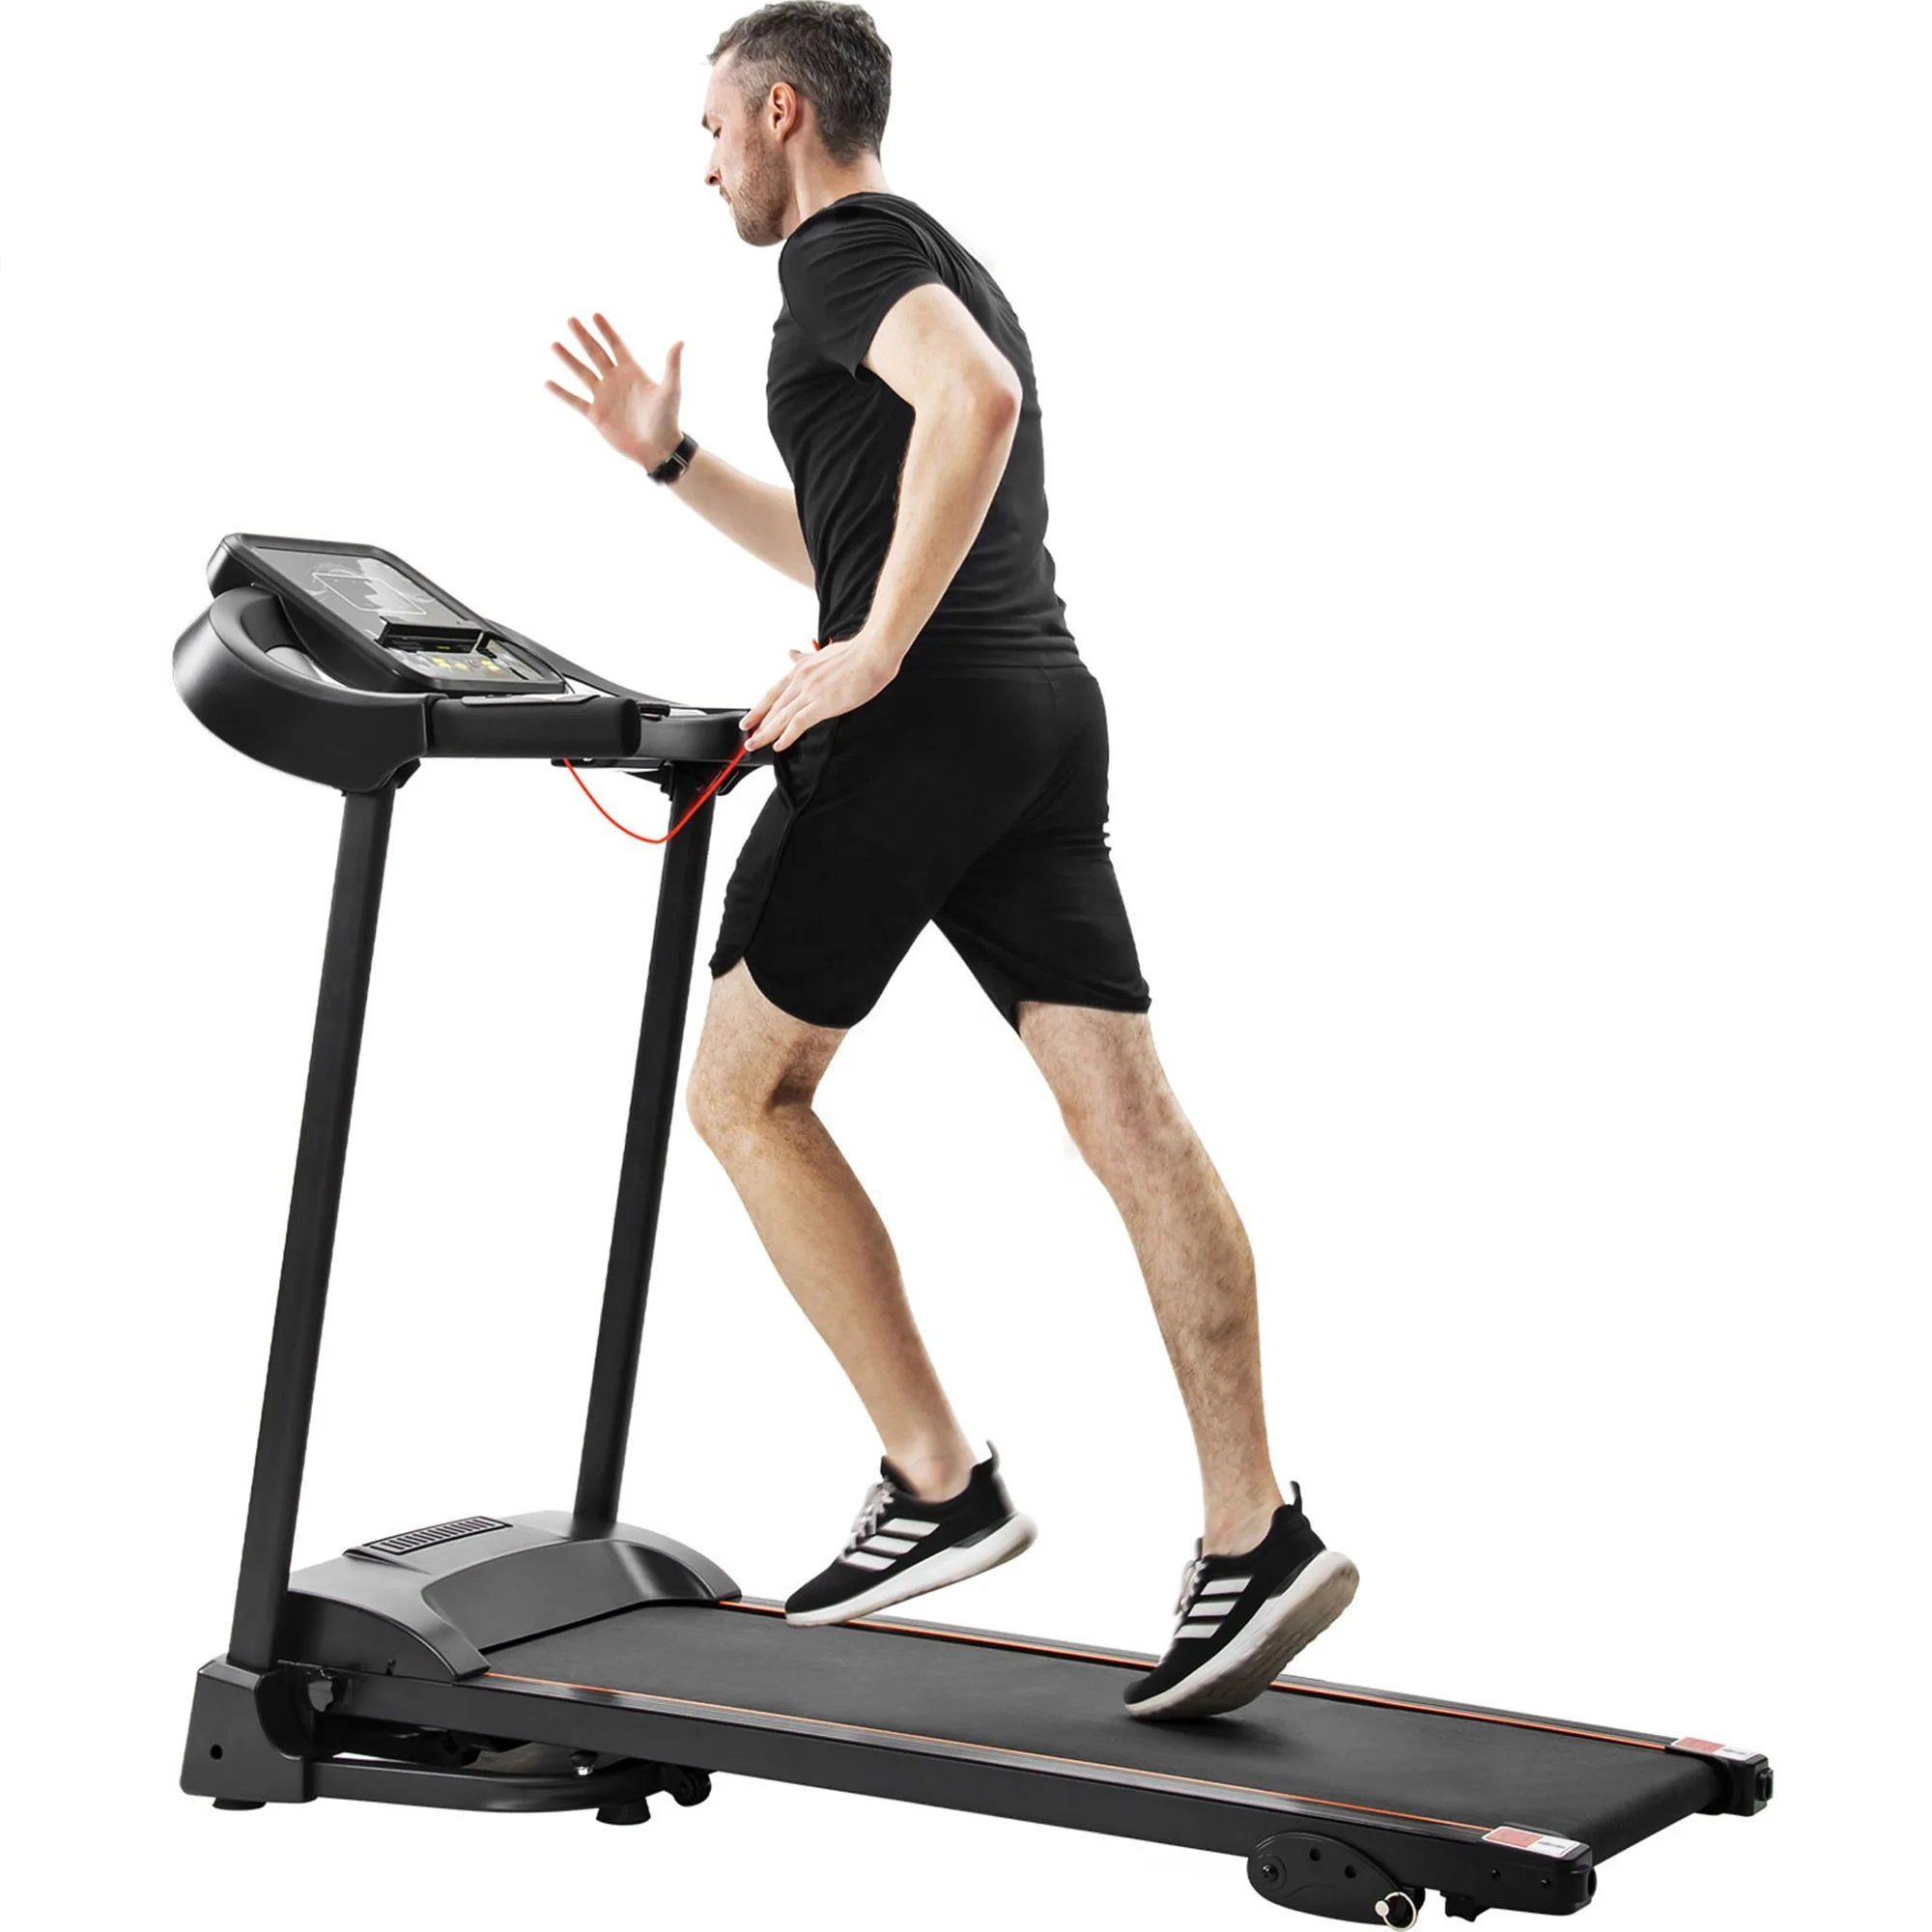 Pro Folding Walking Machine Treadmill Running Jogging Home Gym Exercise Fitness